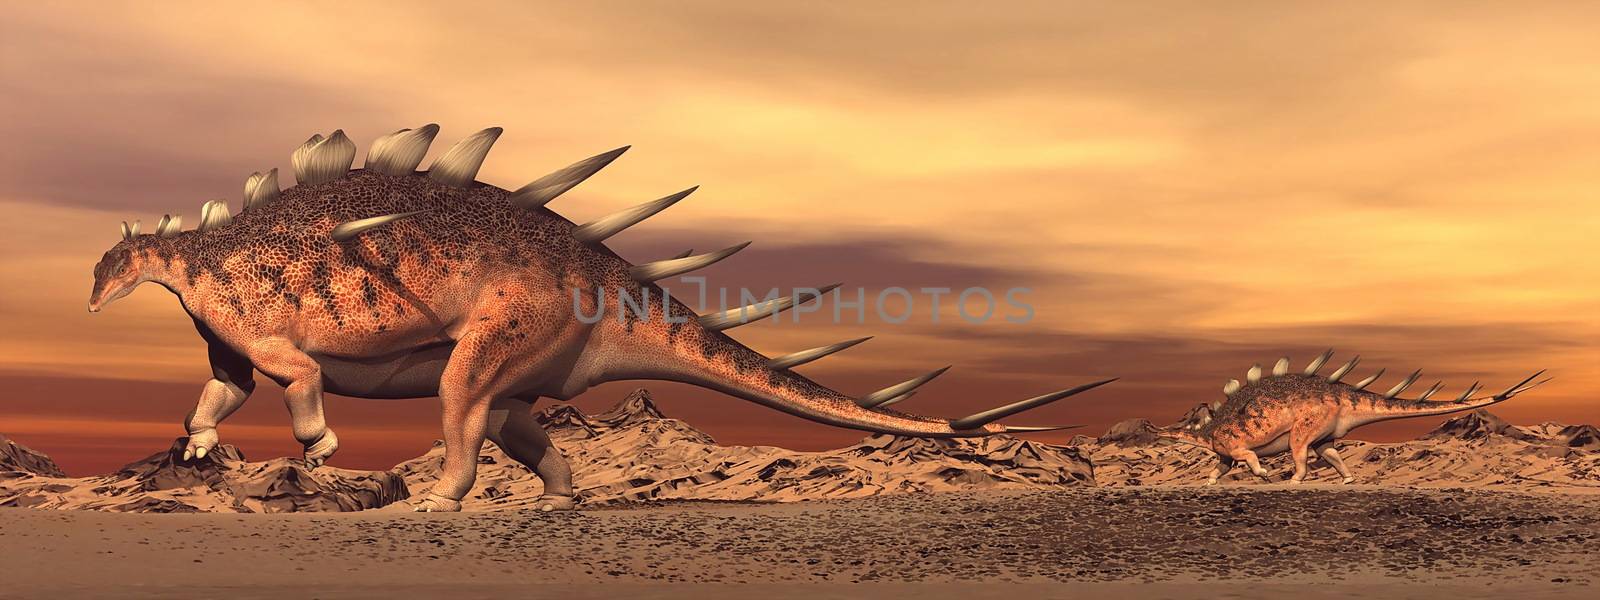 Kentrosaurus dinosaurs mum and baby walking in the desert by sunset